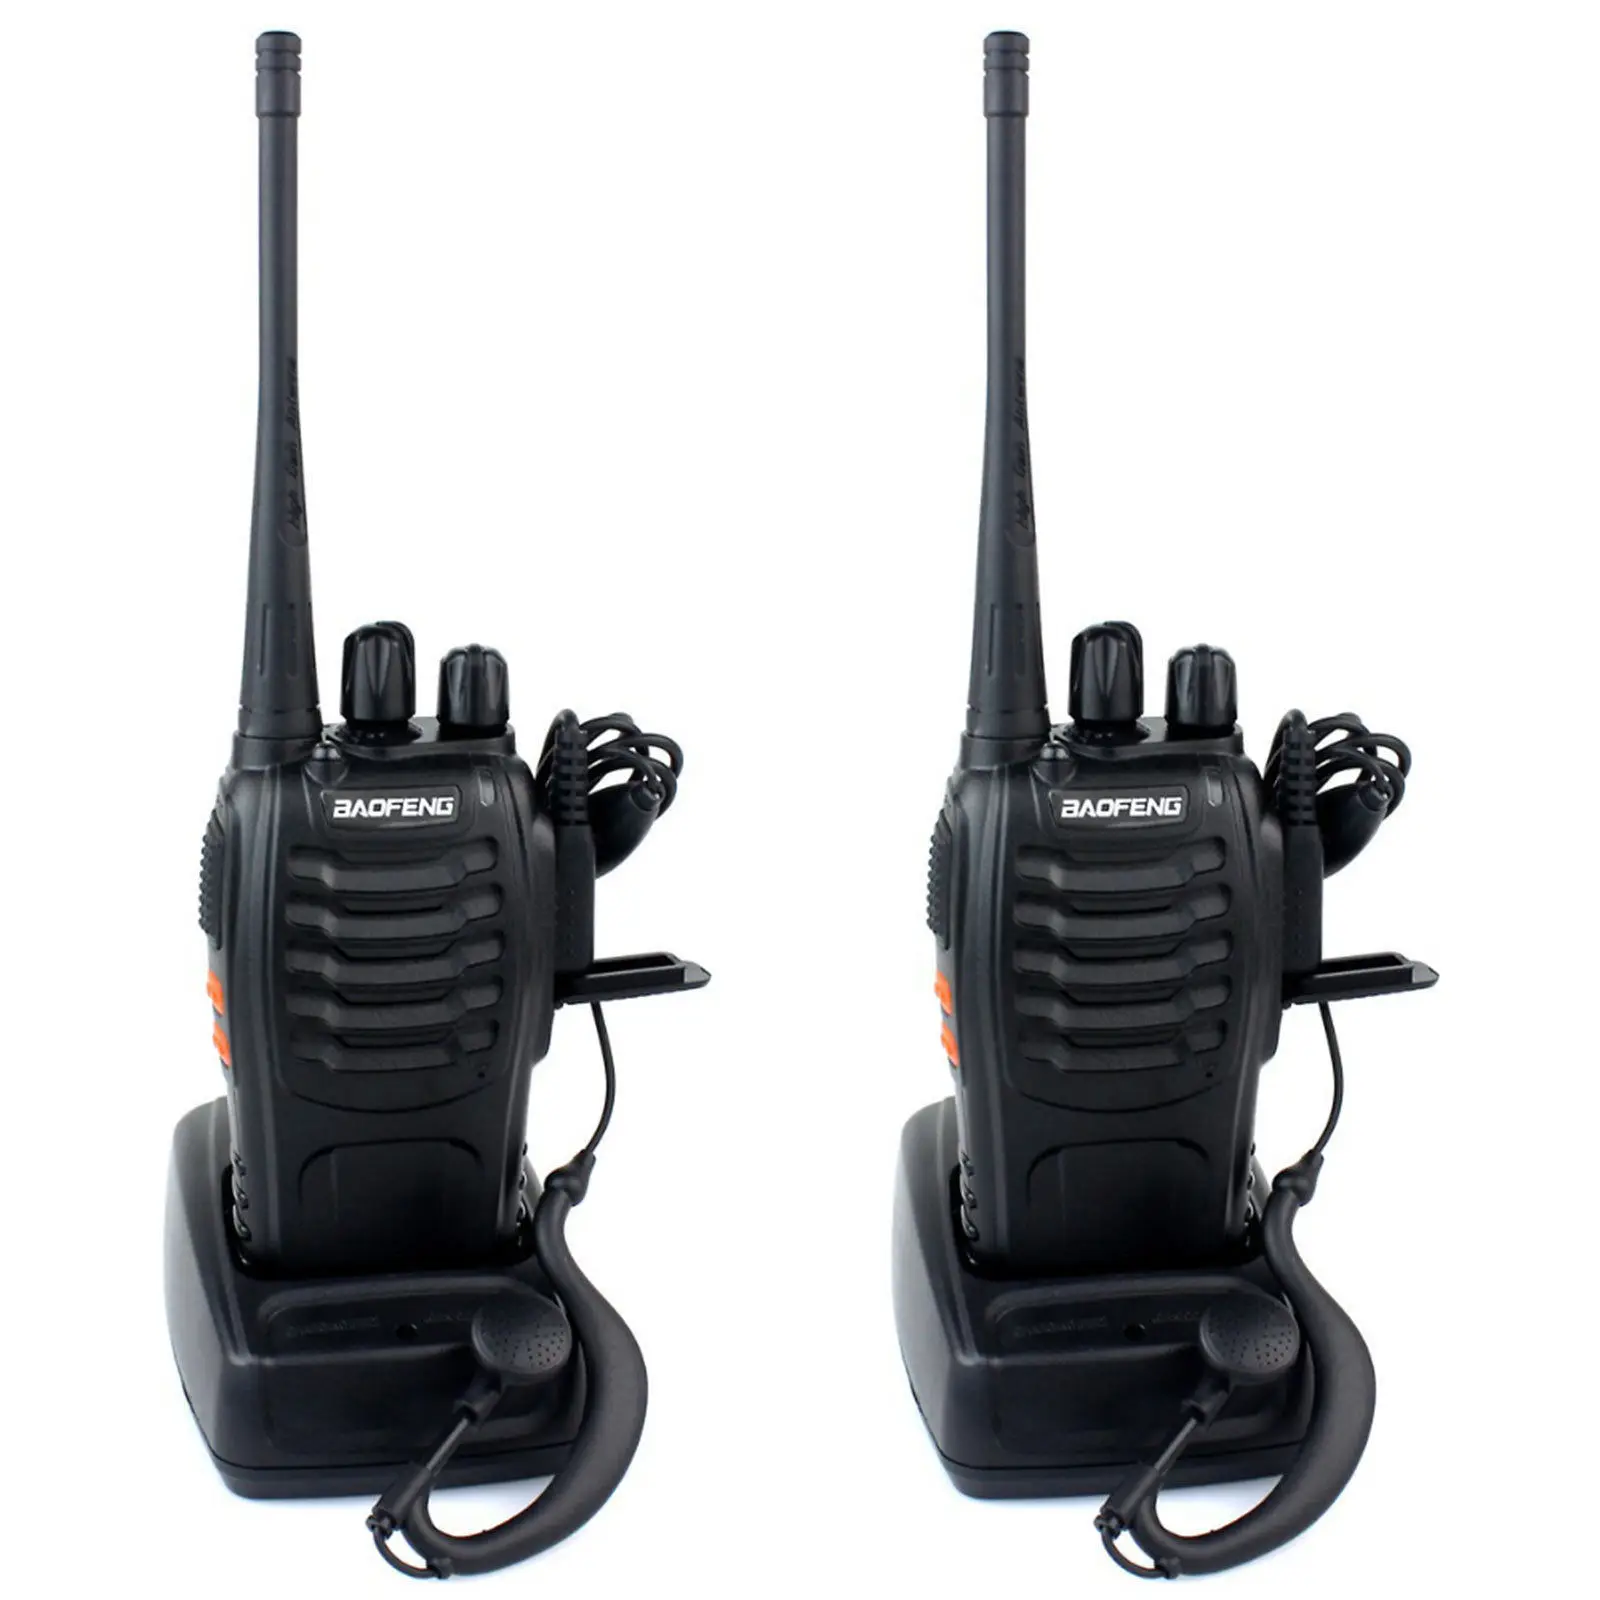 

2Pcs/1Pcs baofeng BF-888S Walkie Talkie Portable radio station BF888s 5W handheld Comunicador Transmitter Transceiver radio